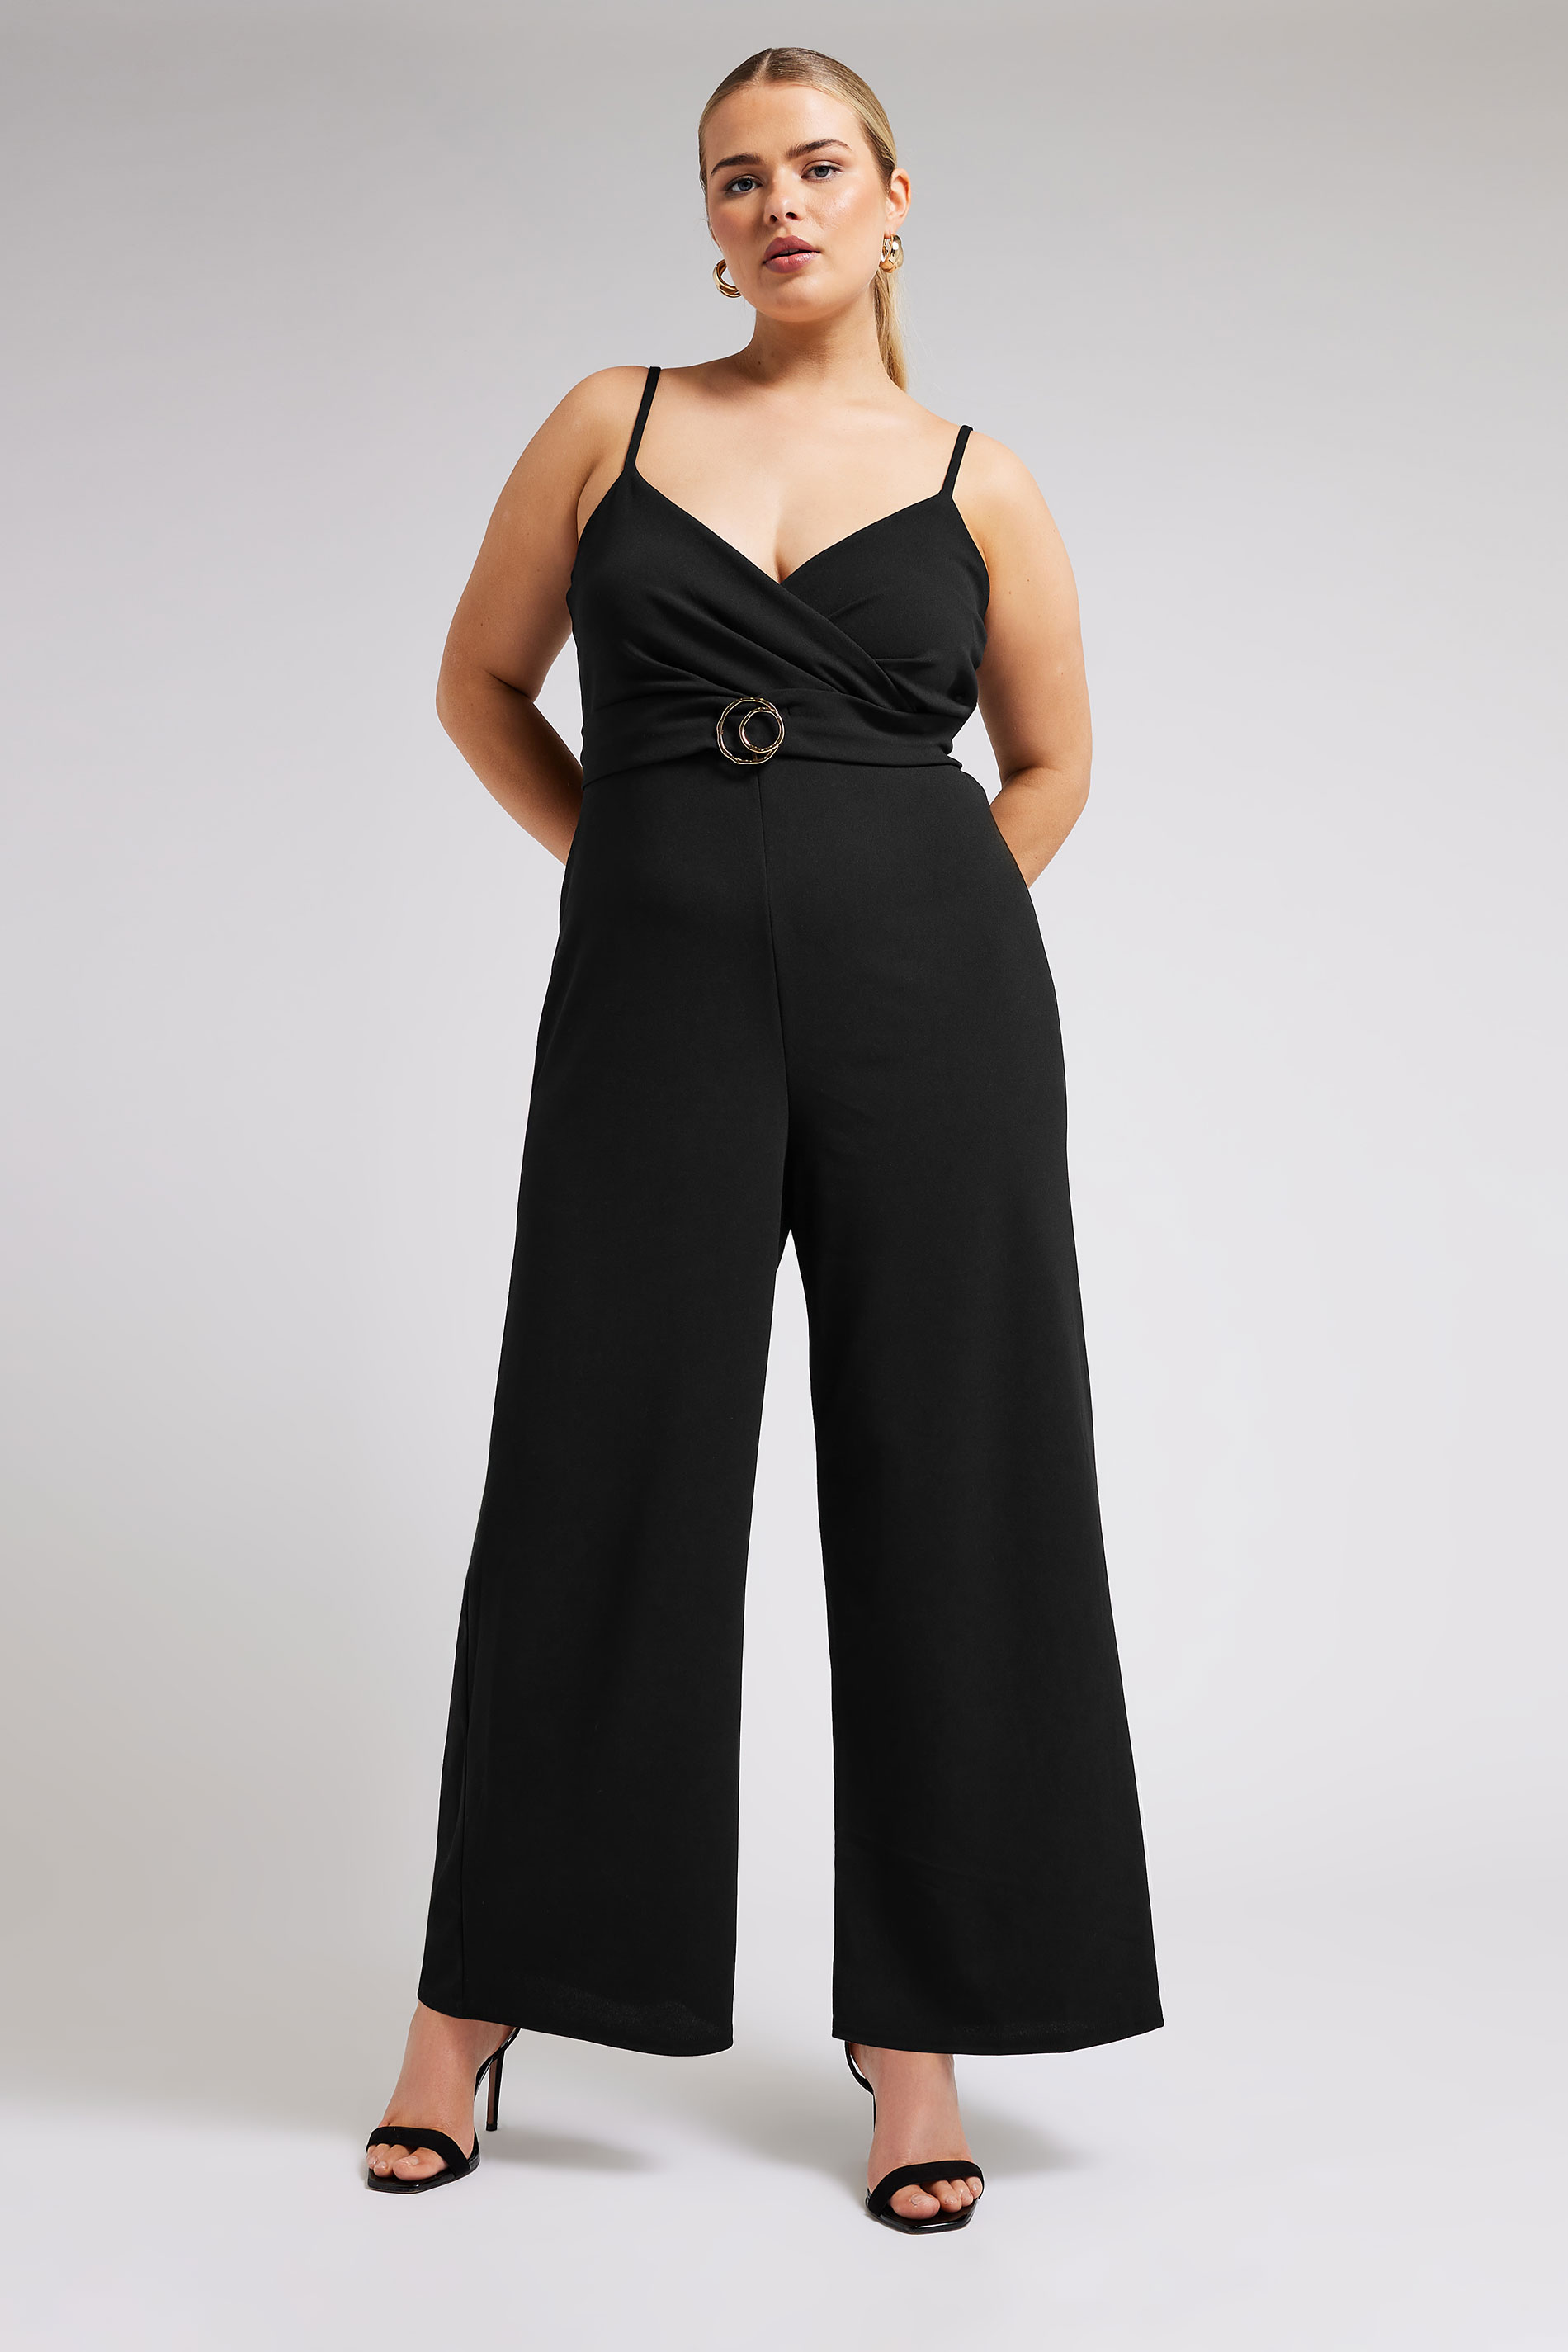 YOURS LONDON Plus Size Black Wrap Front Jumpsuit | Yours Clothing 2